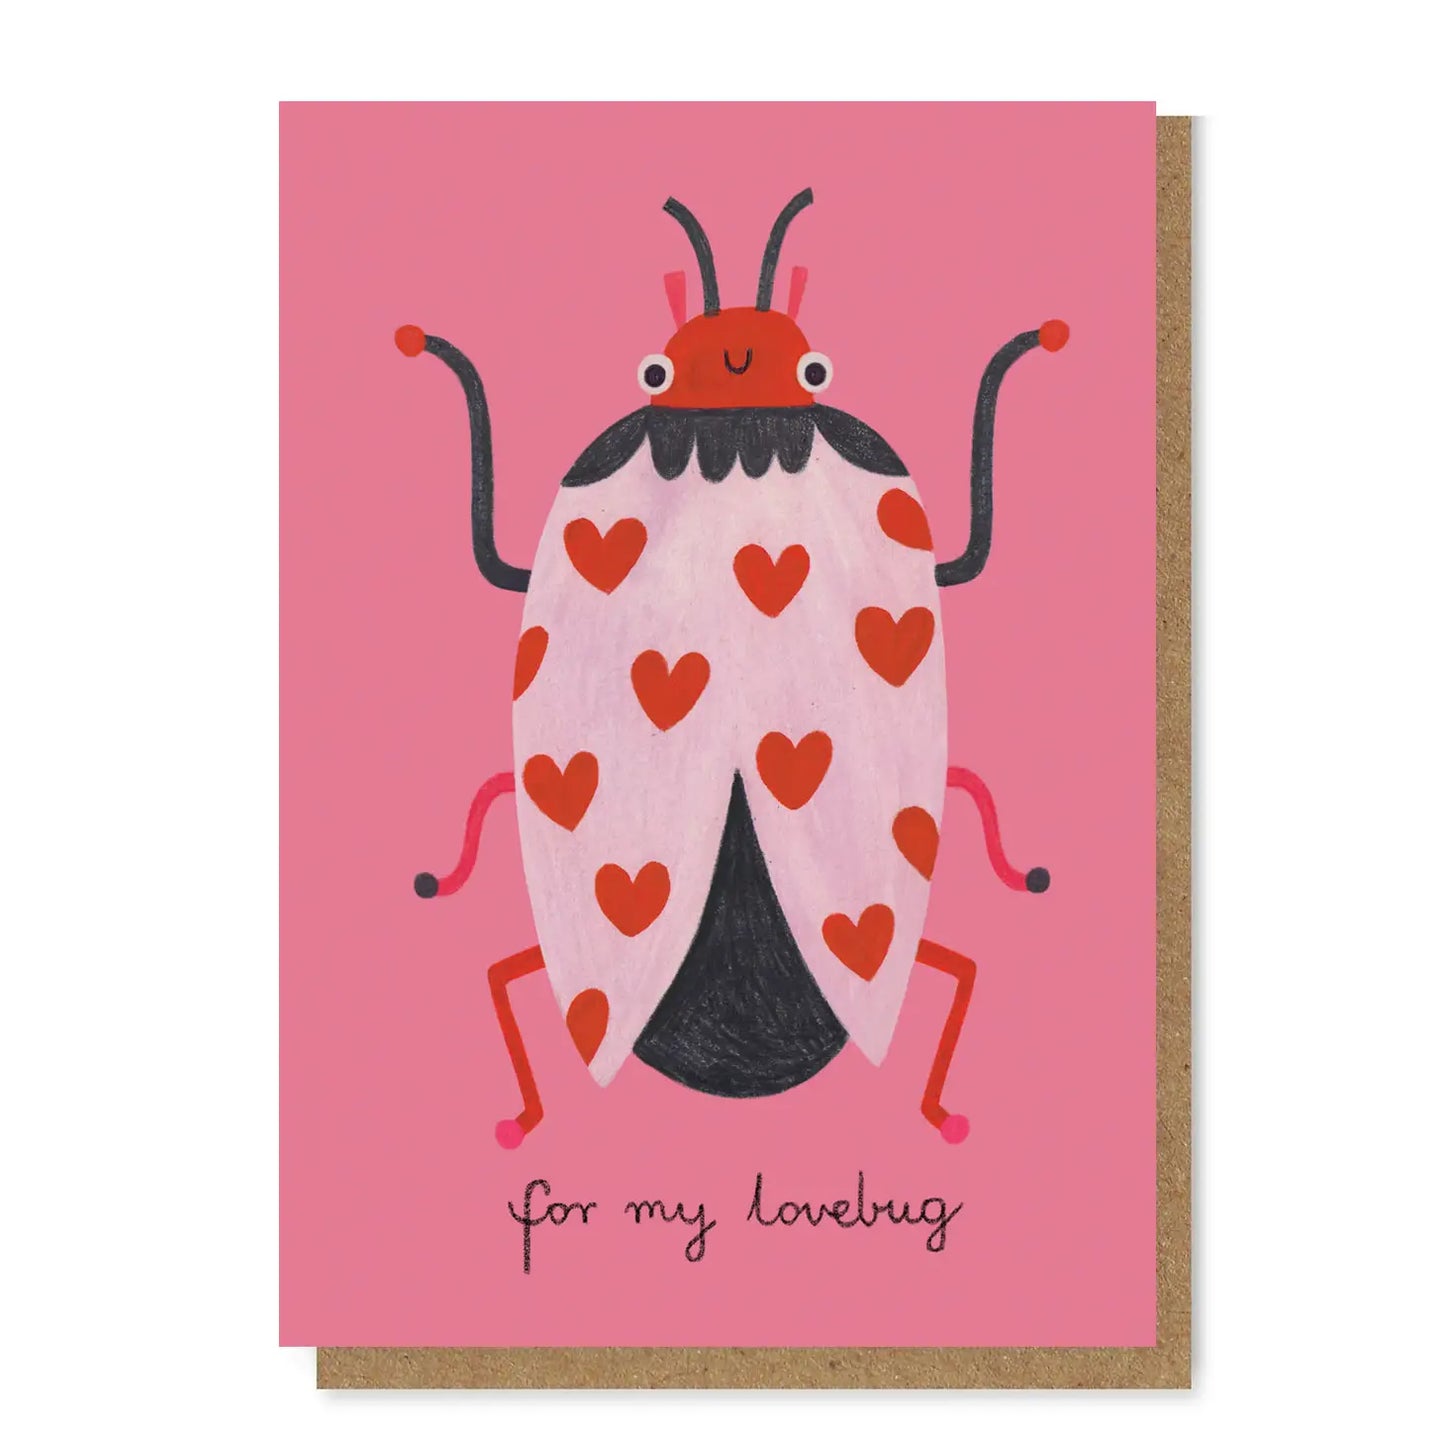 Lovebug card